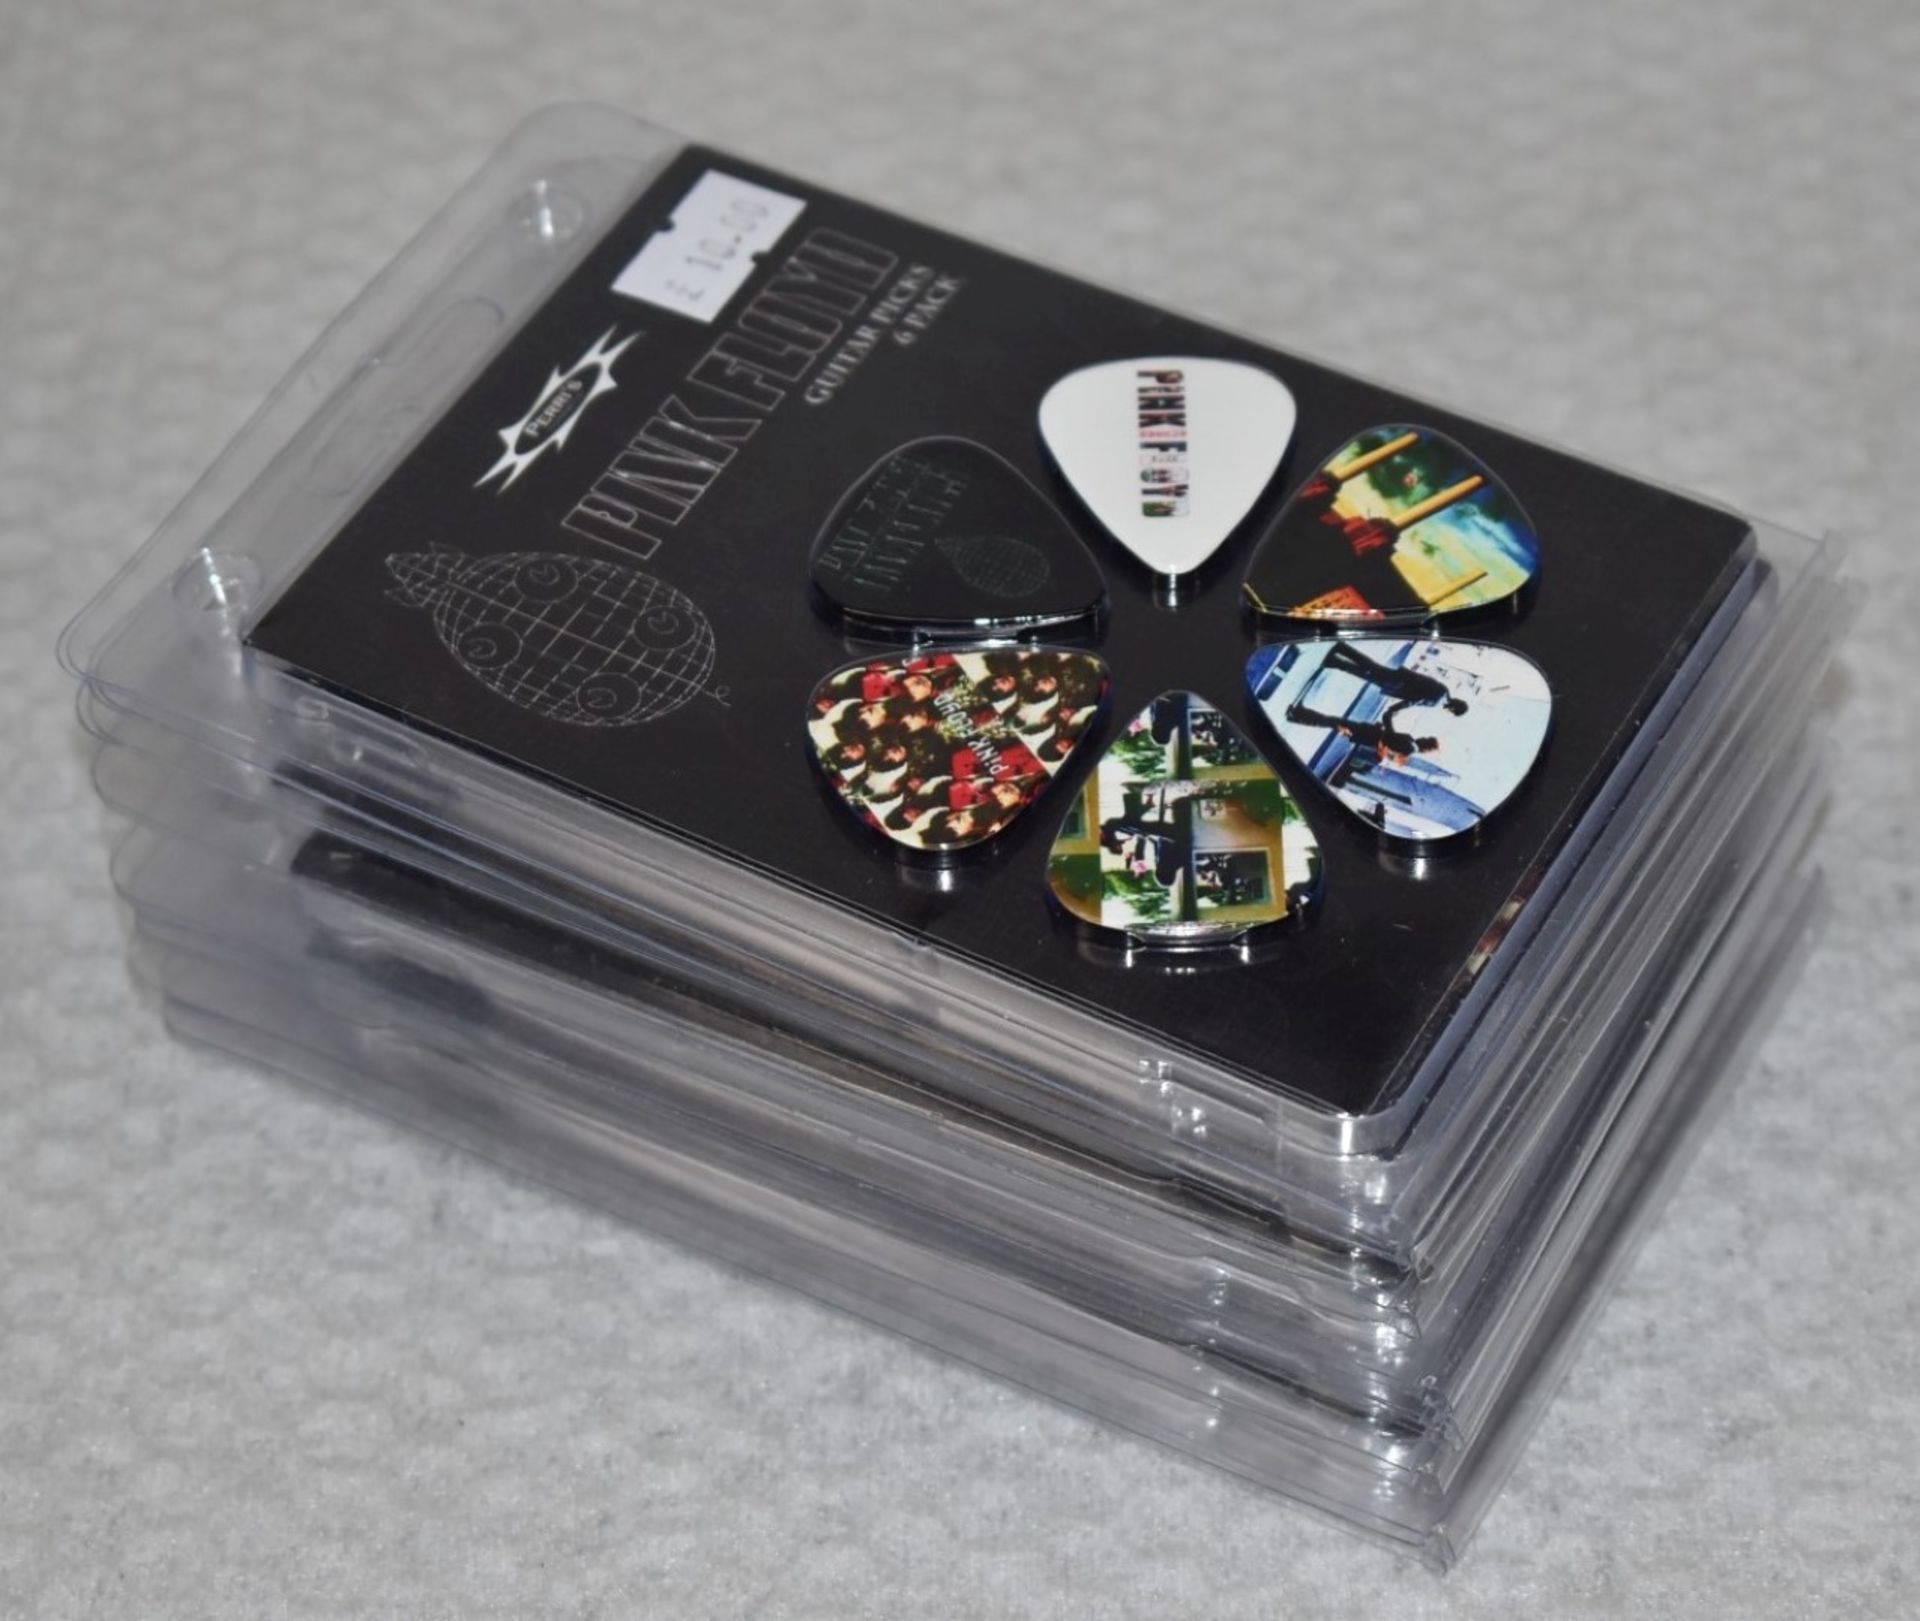 10 x Pink Floyd Guitar Pick Multipacks By Perri's - 6 Picks Per Pack - Officially Licensed - Image 2 of 6